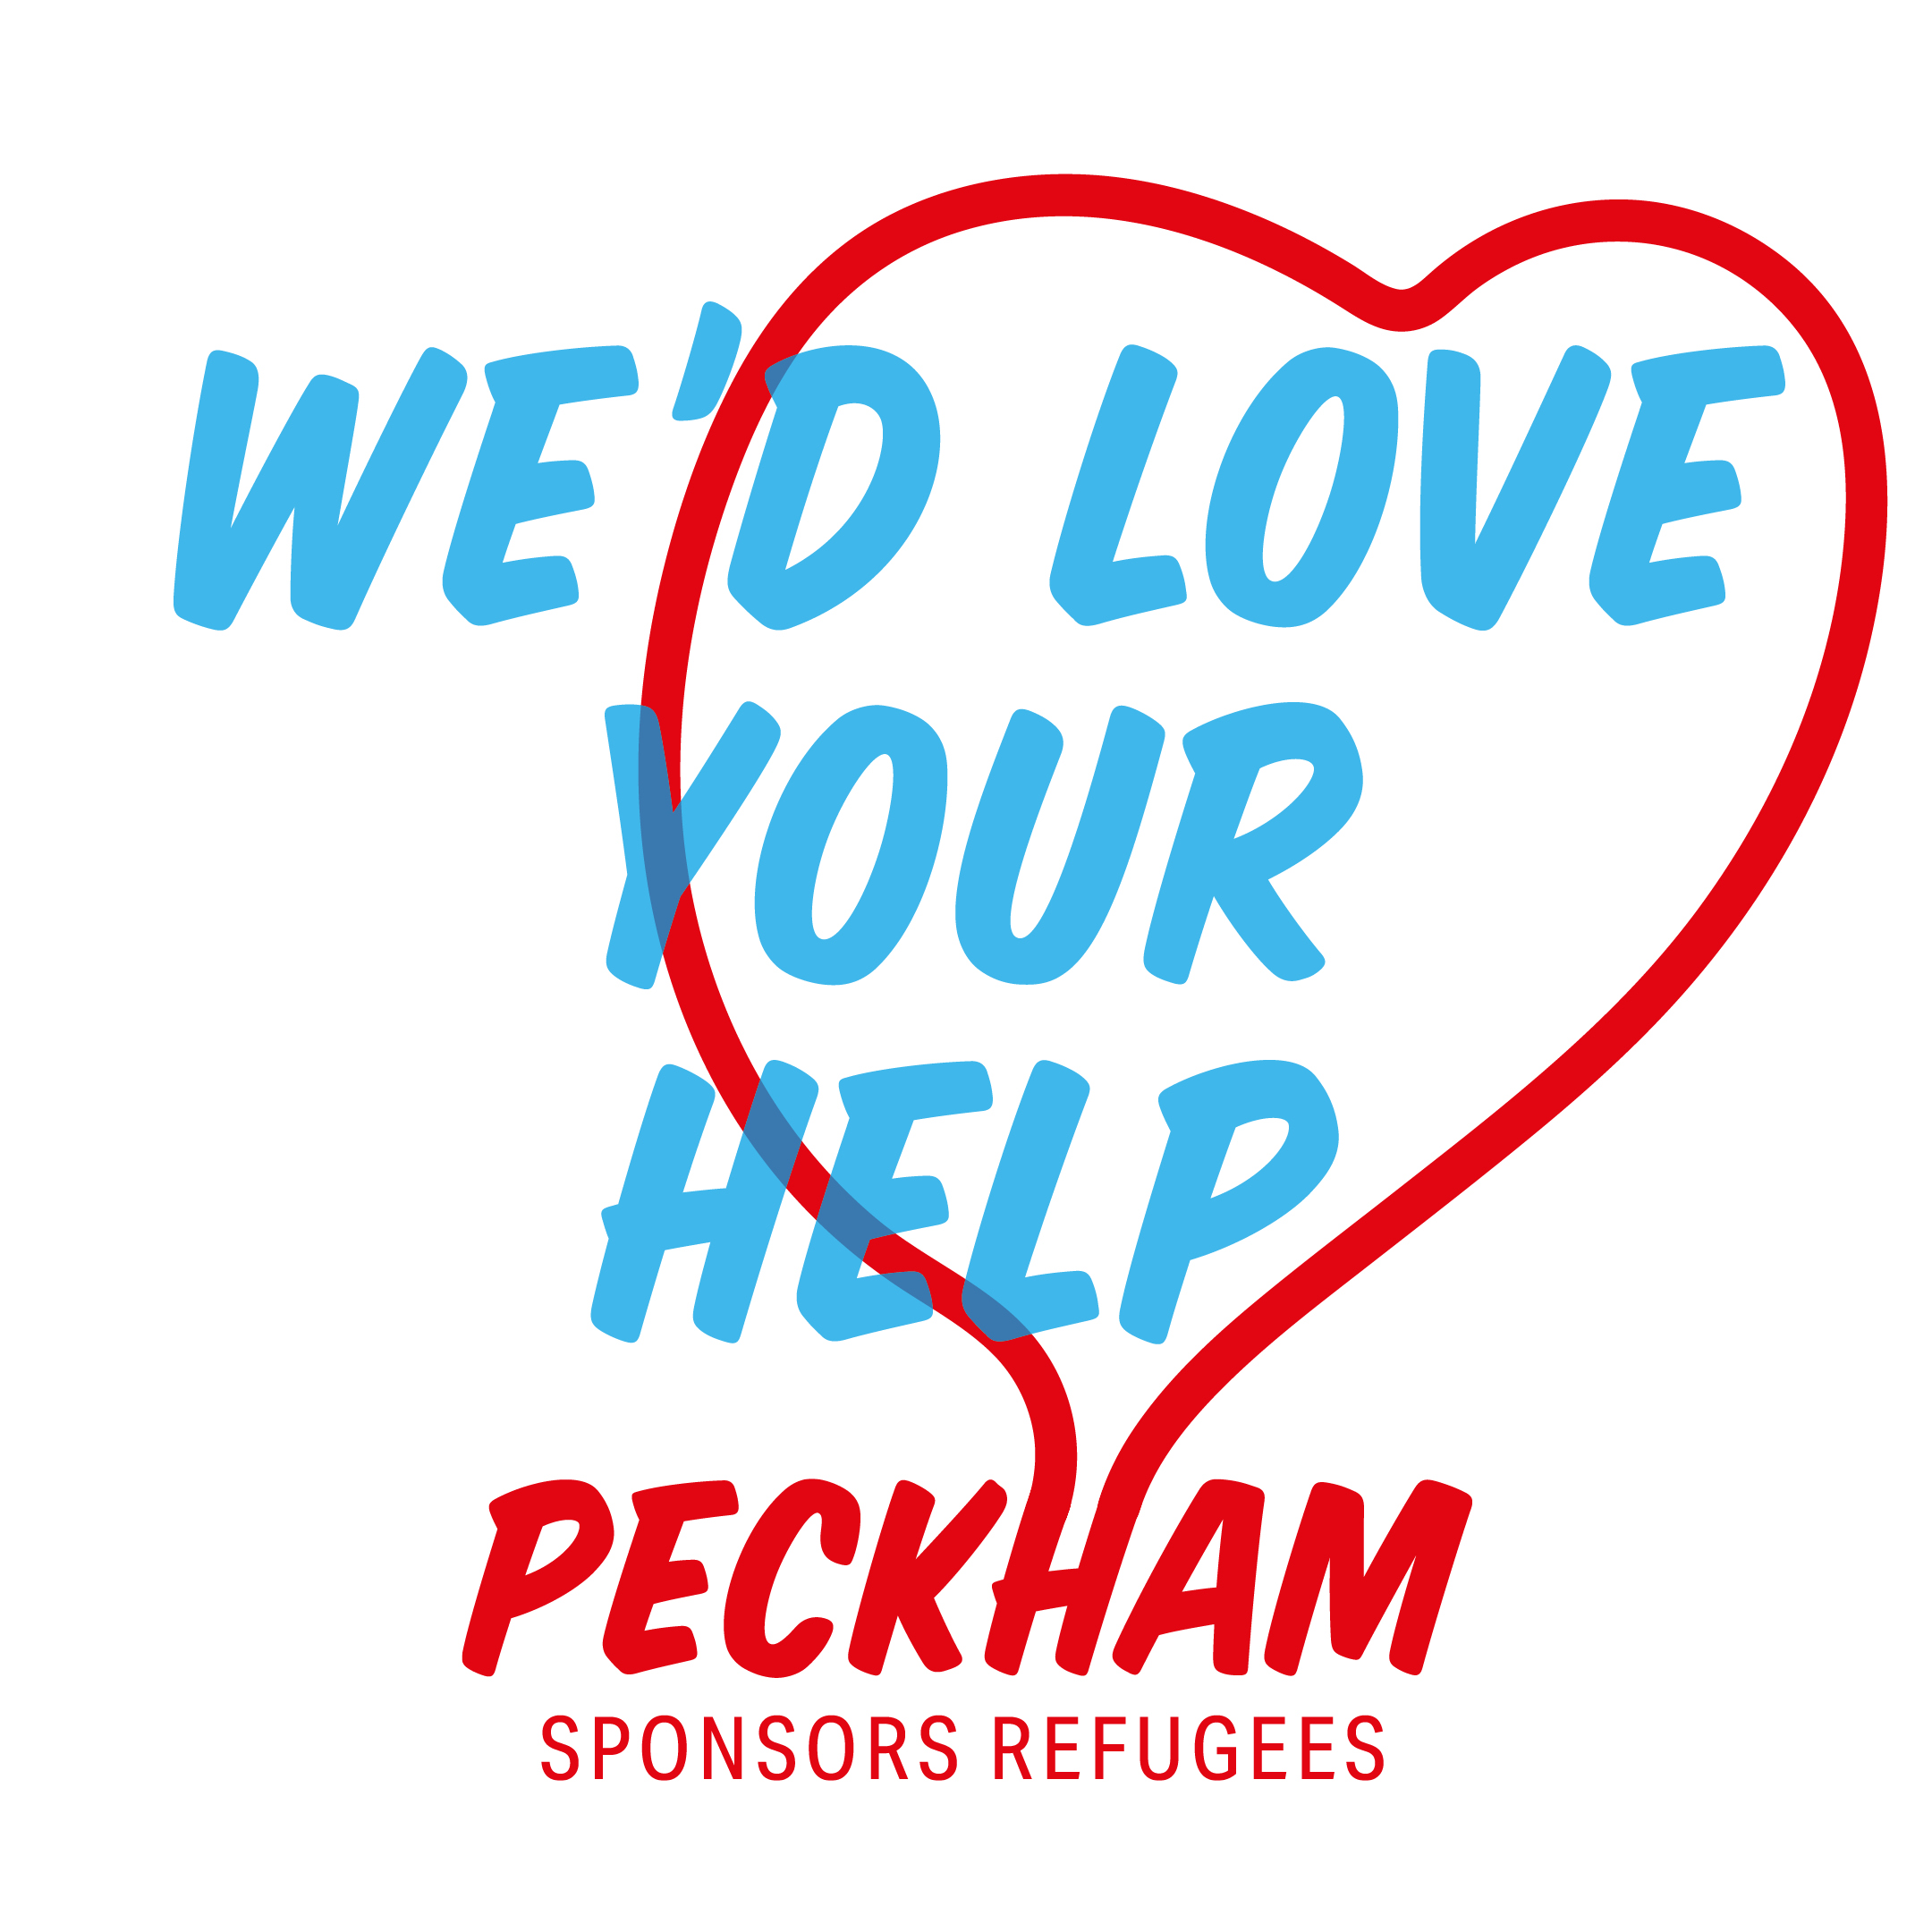 Peckham Sponsors Refugees